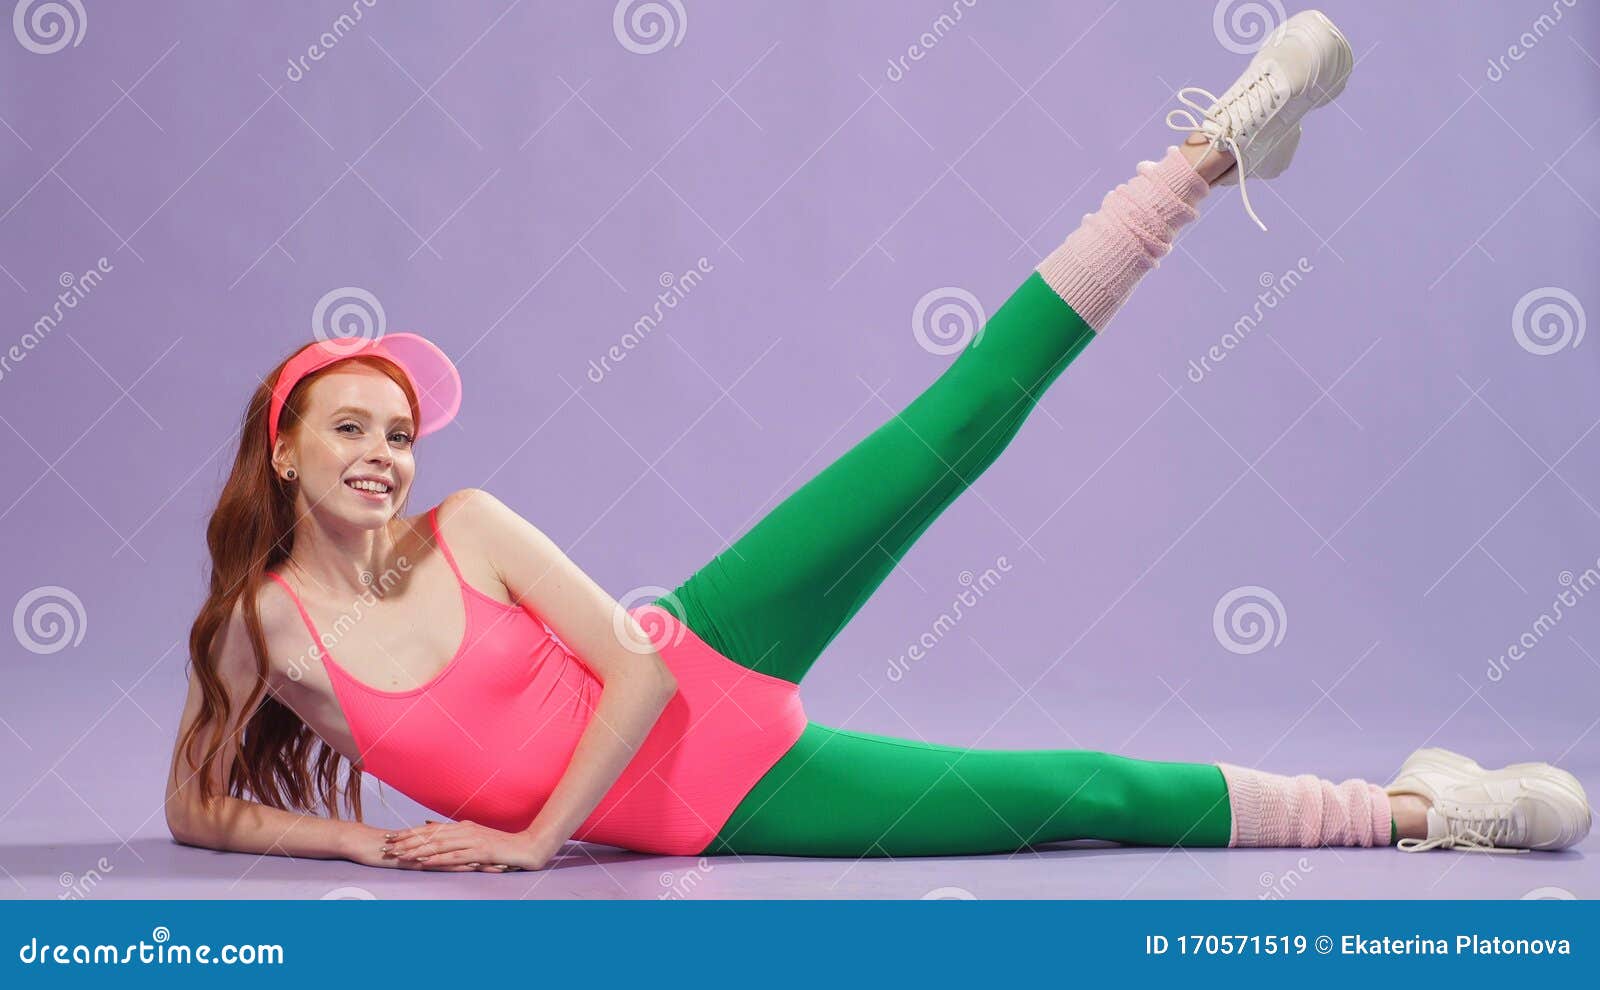 Redhead Woman Aerobic Exercises in Sports Clothing Stock Image Image of aerobics, bodysuit: 170571519